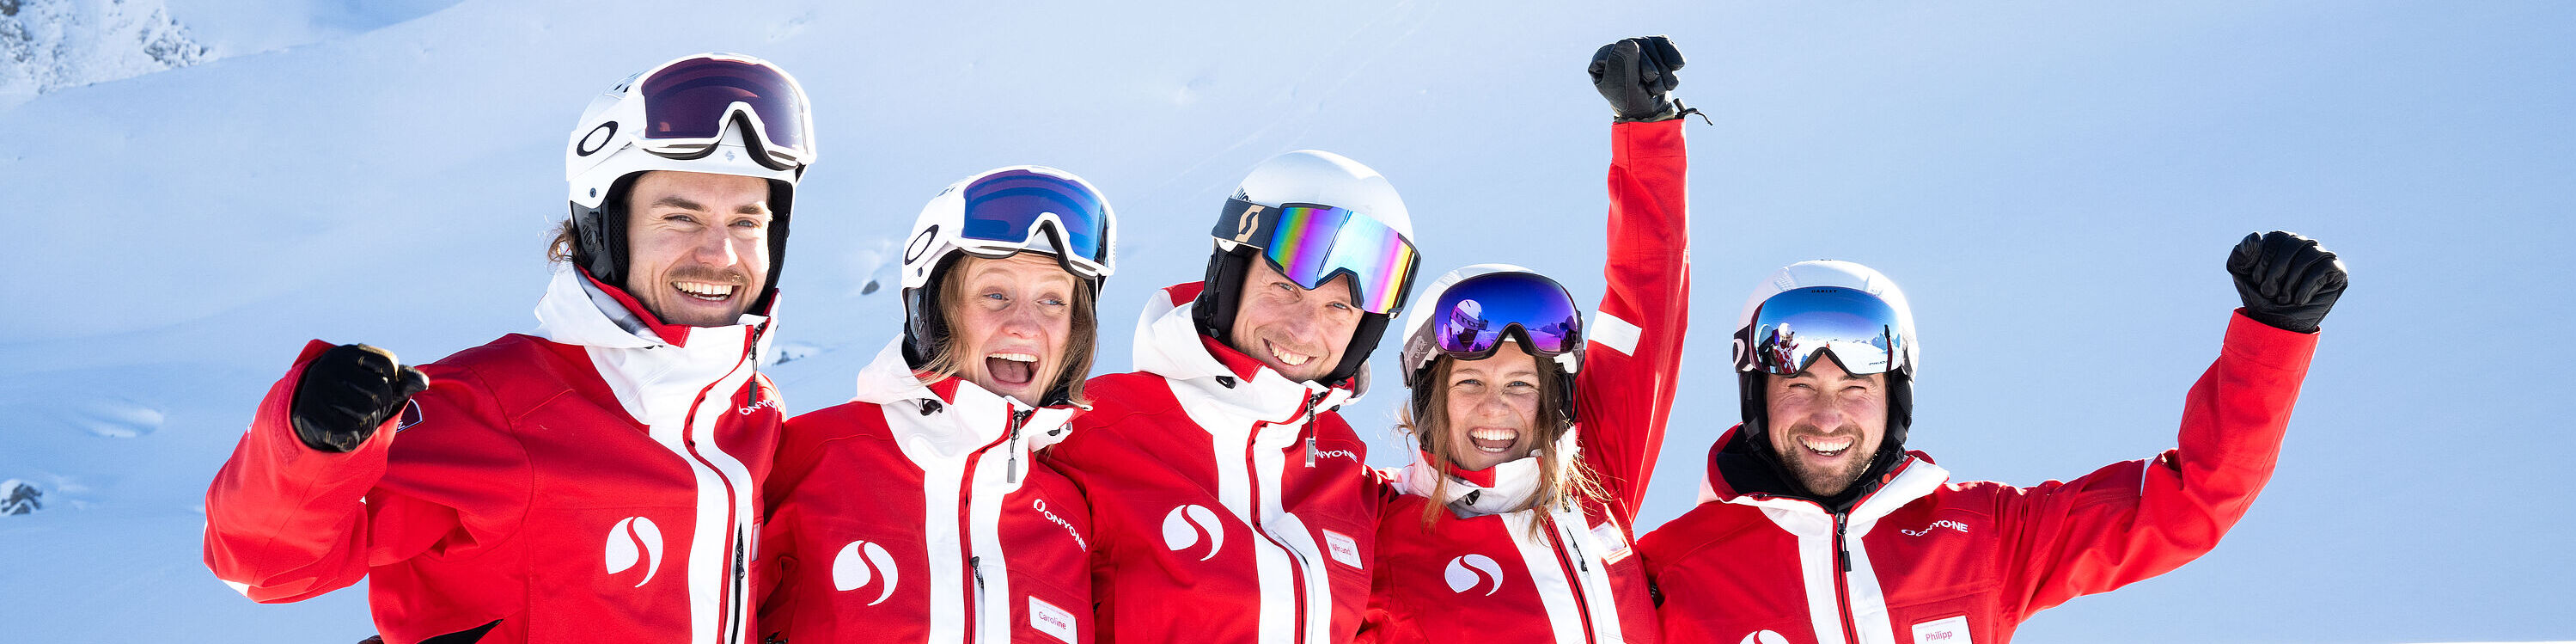 Vijf skileraren in rode skipakken steken hun gebalde vuisten in de lucht en lachen